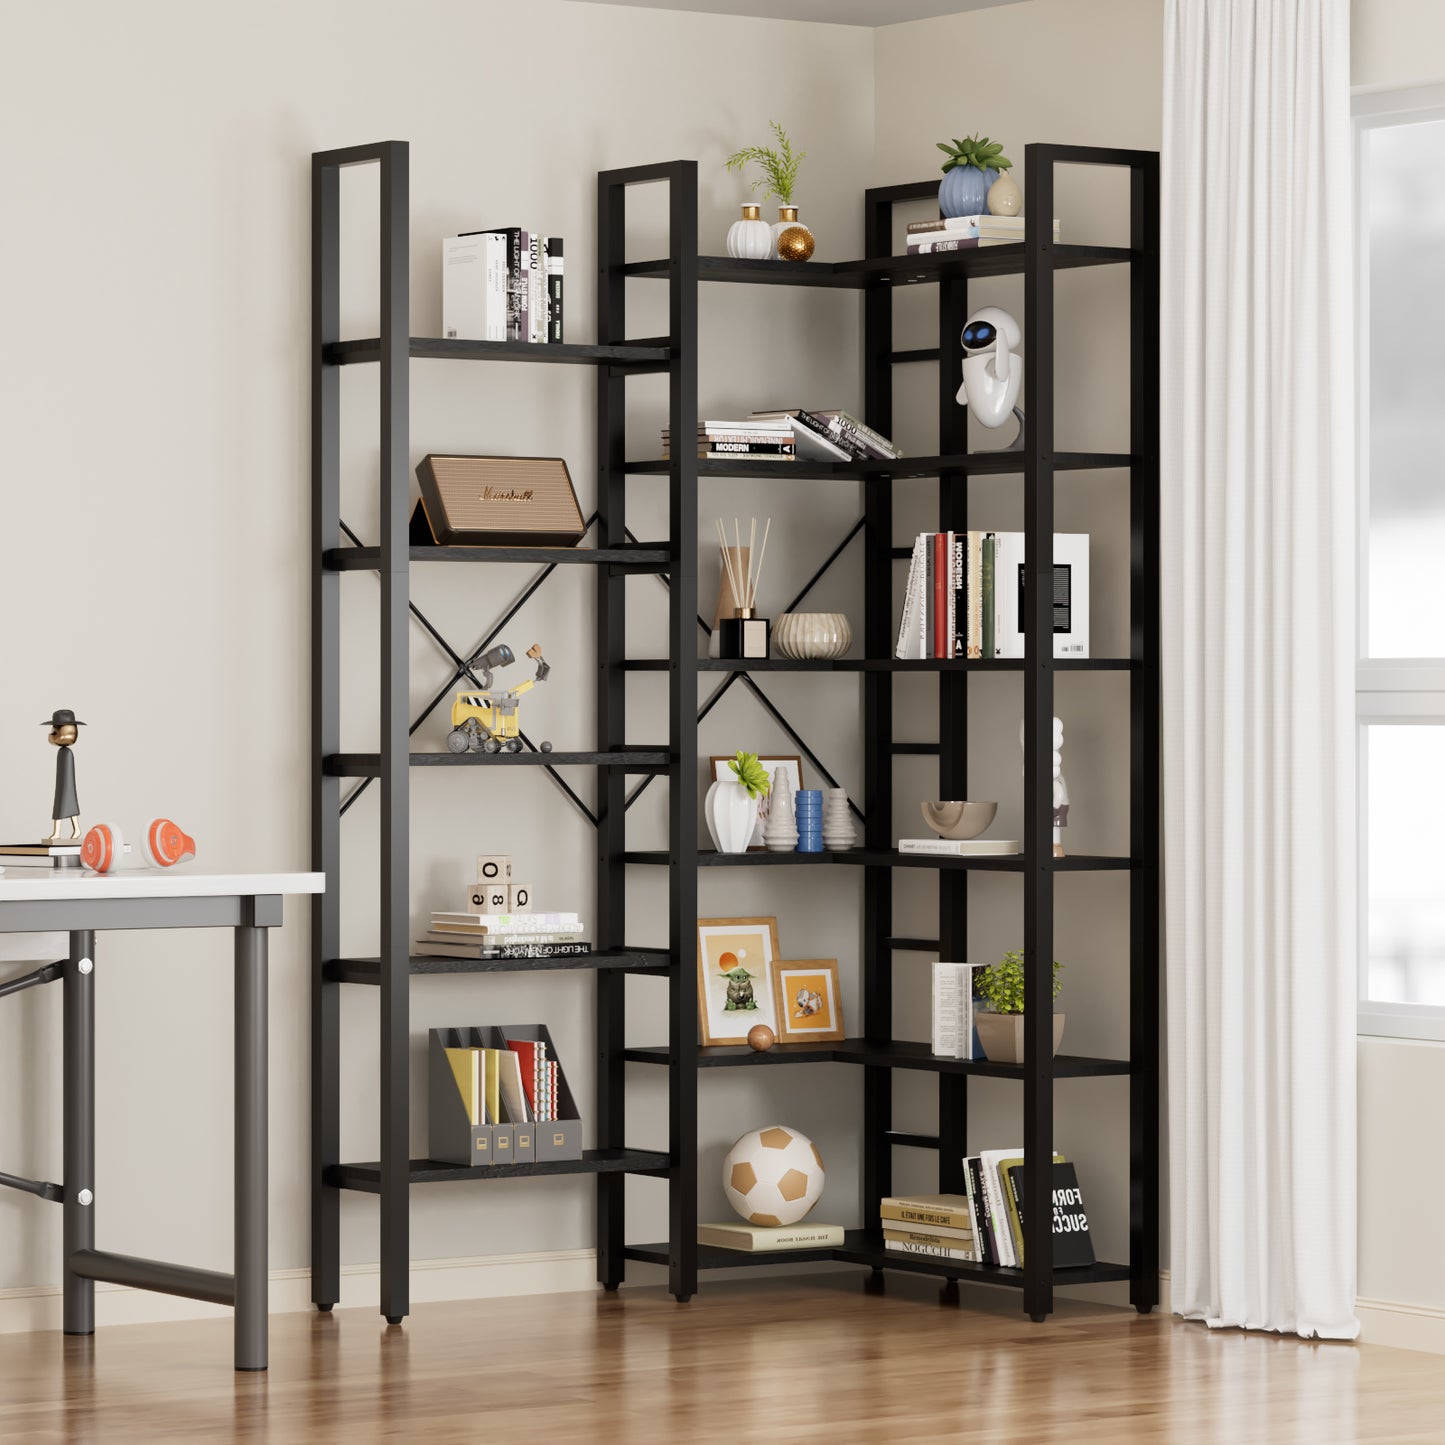 Tribesigns 8-Tier Bookshelf, 75-Inch Industrial Bookcase